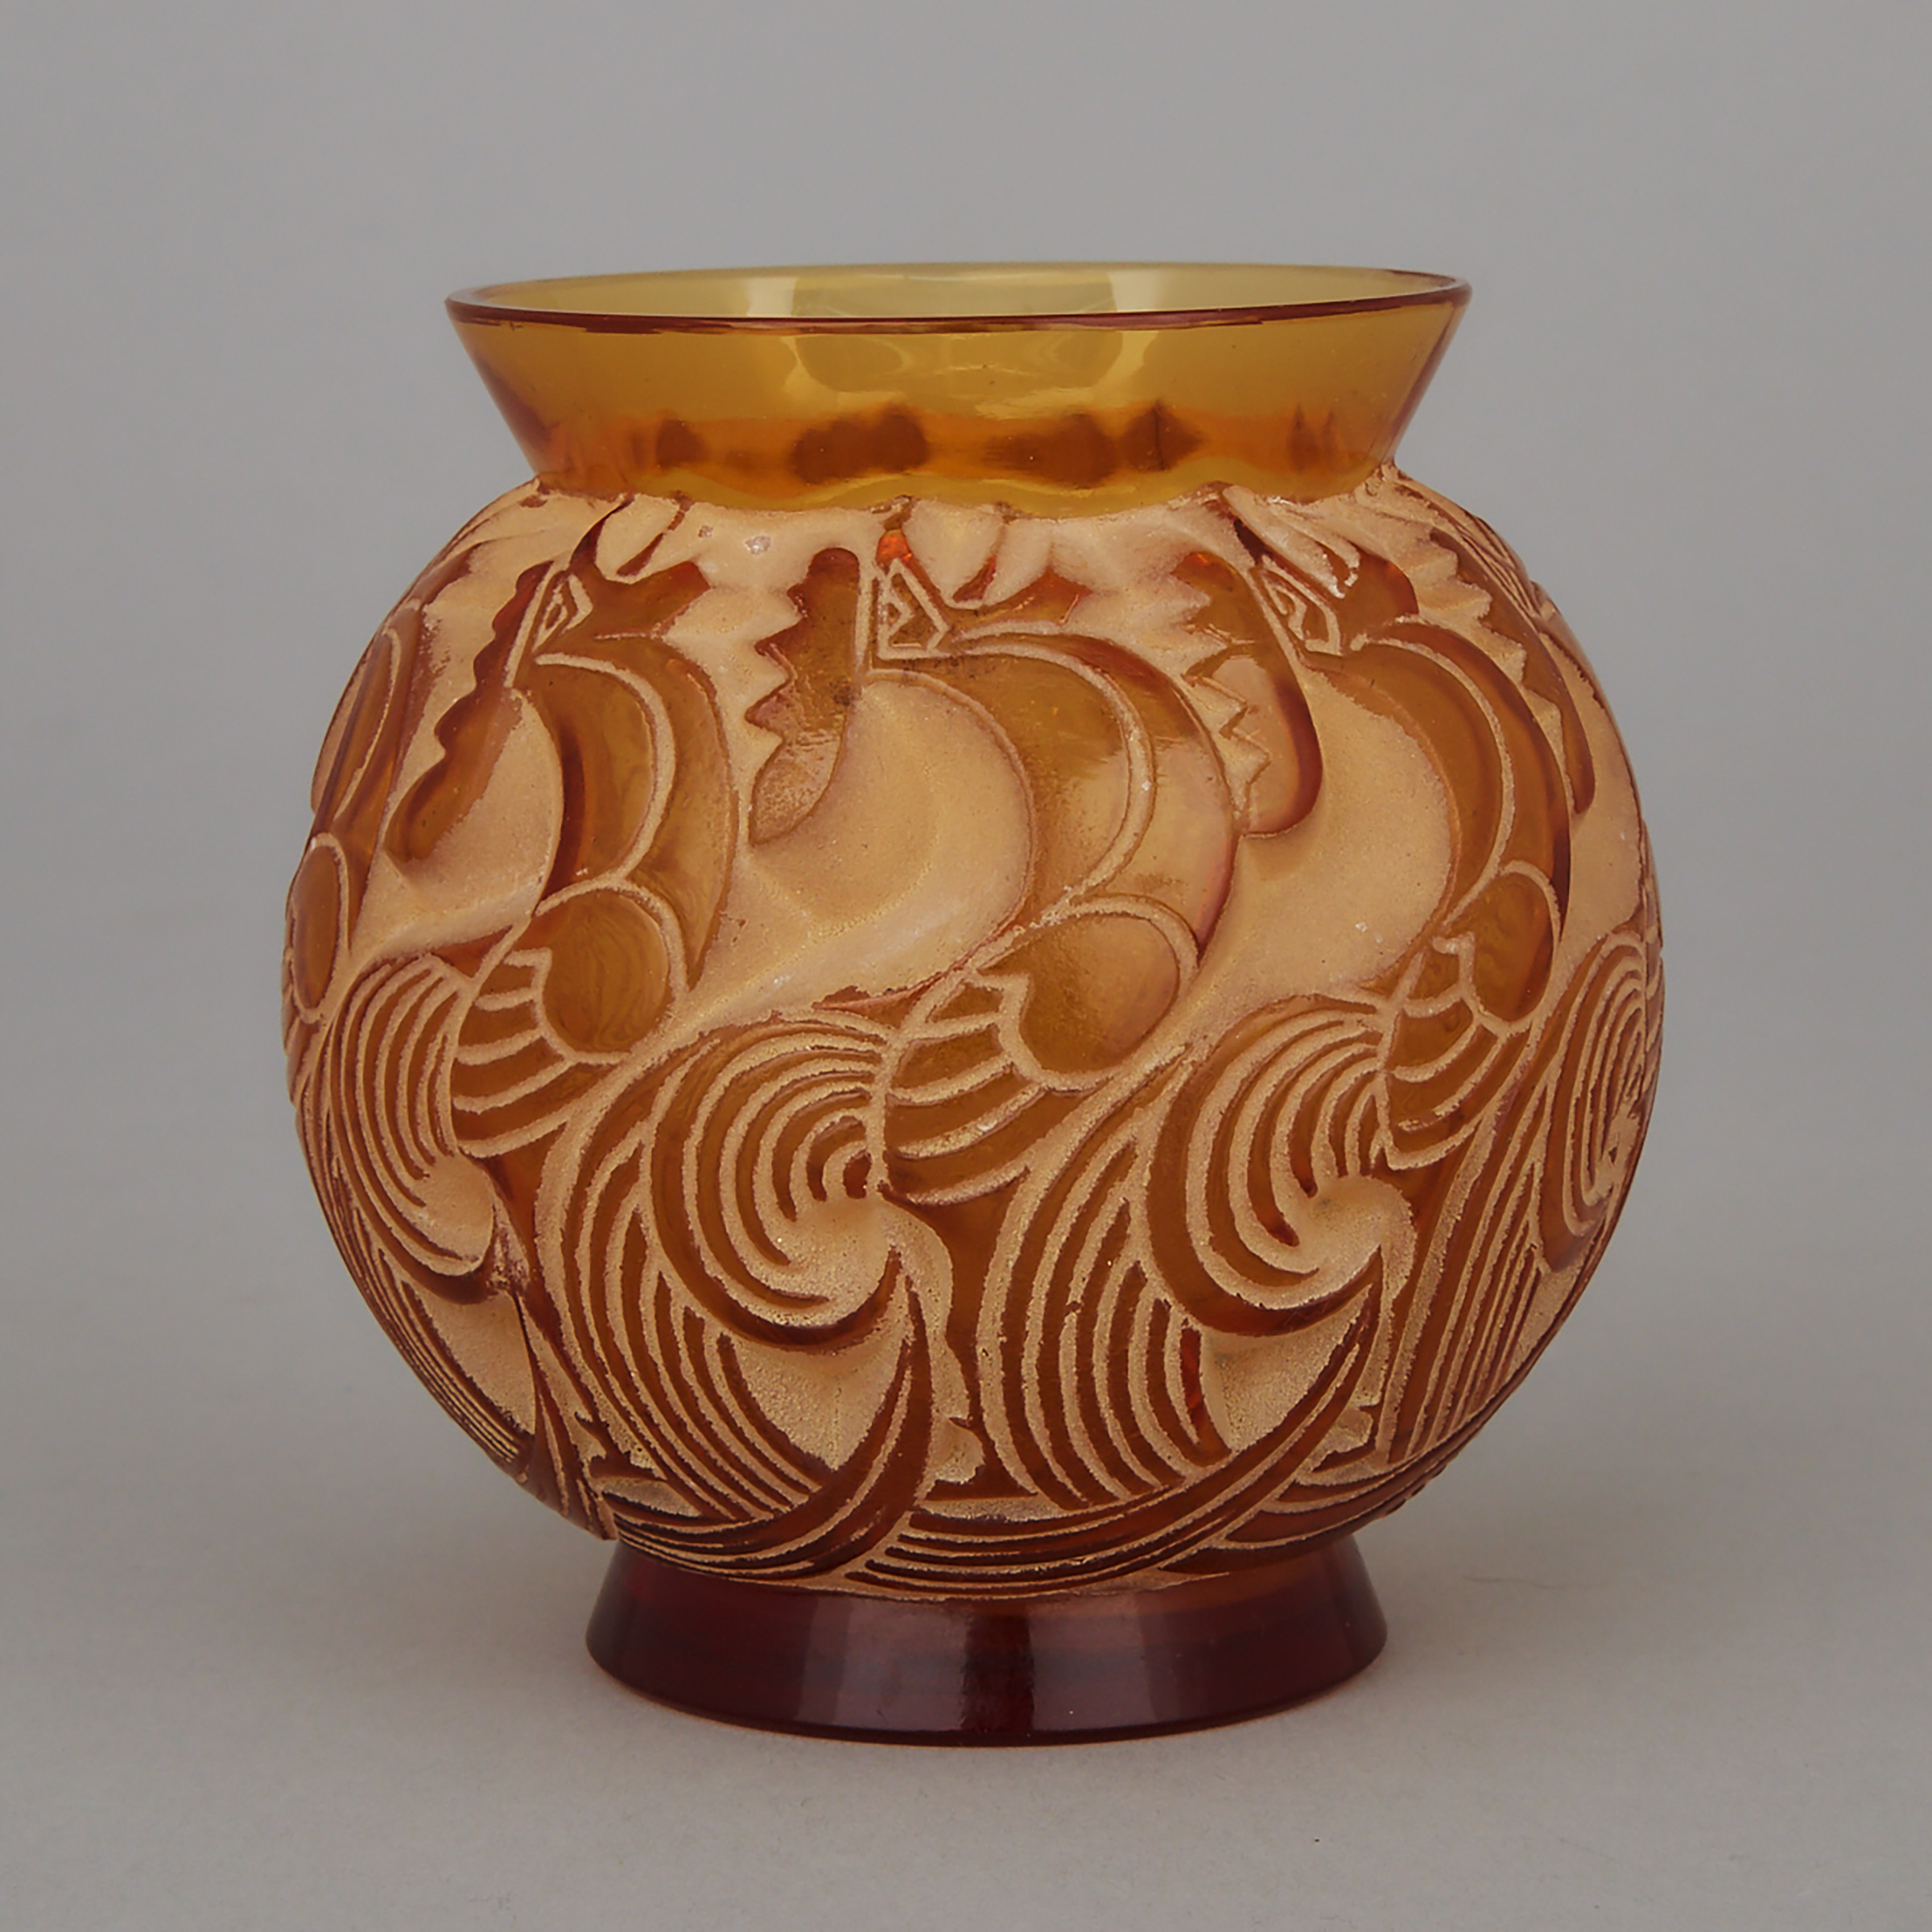 ‘Le Mans’, Lalique Moulded Amber Glass Vase, 1930s